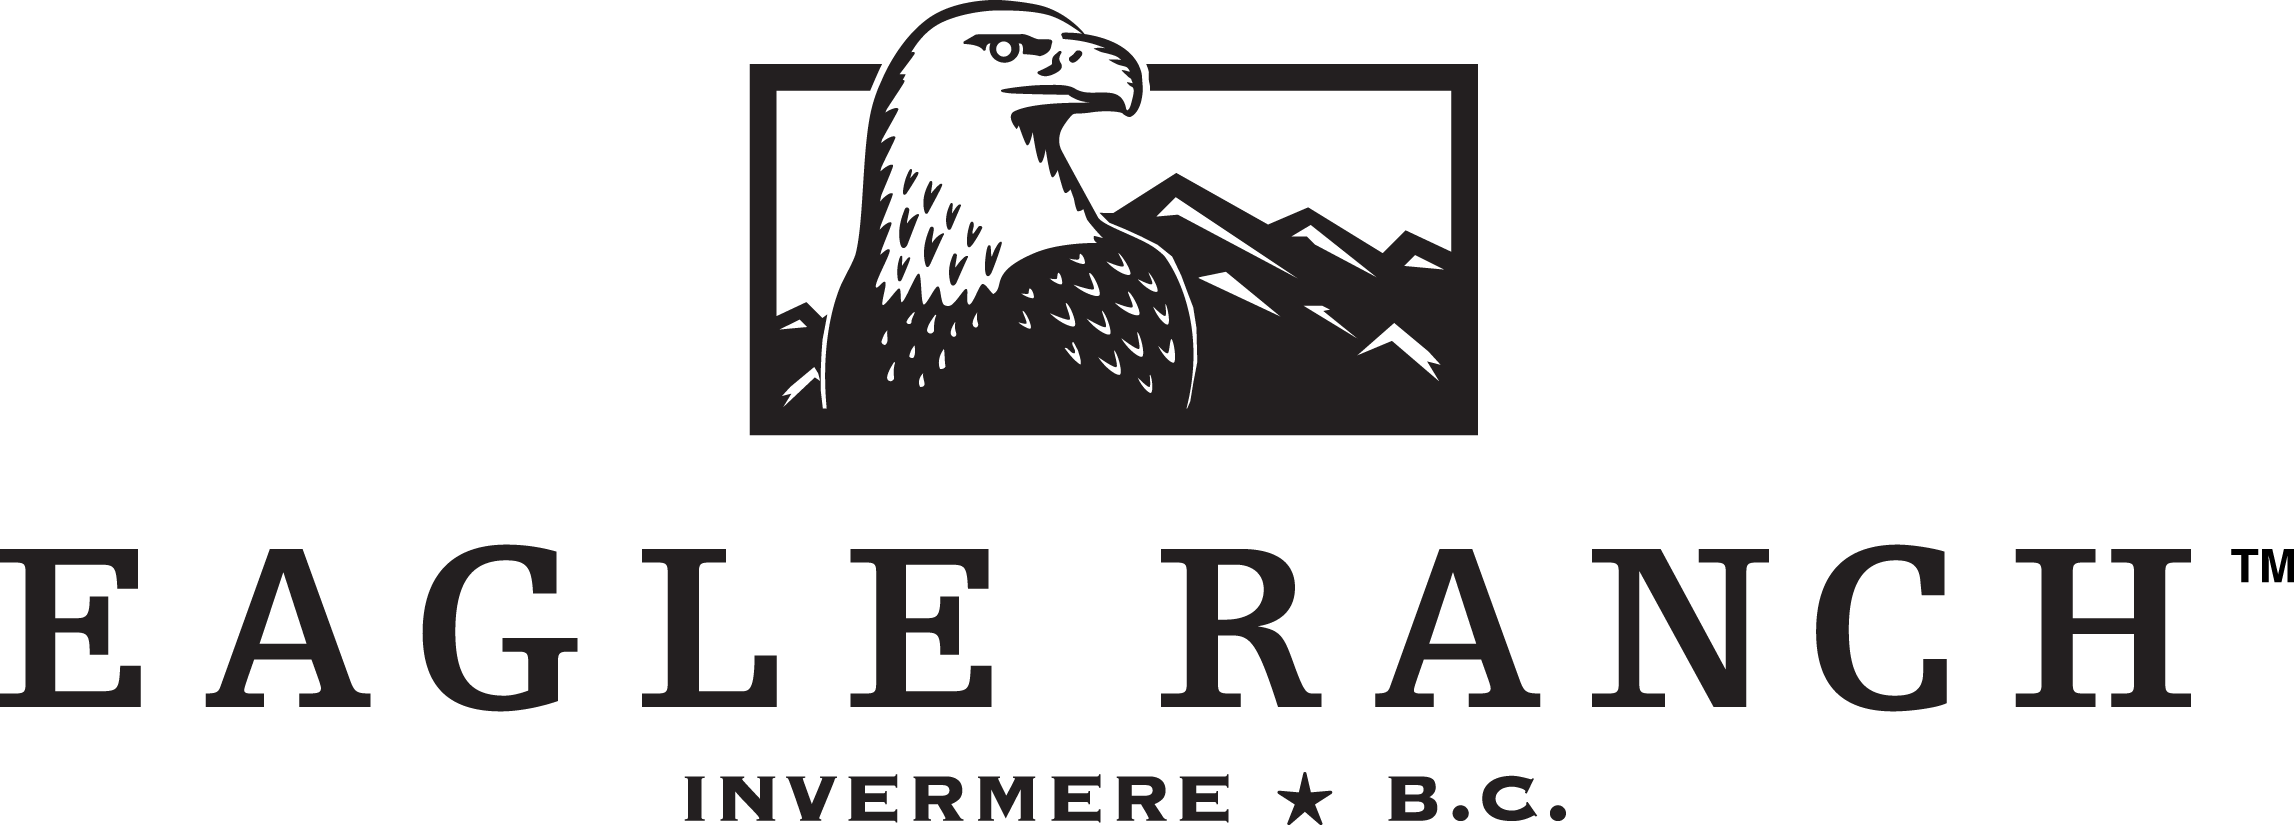 Eagle Ranch_logo_TM-BLK_CS4